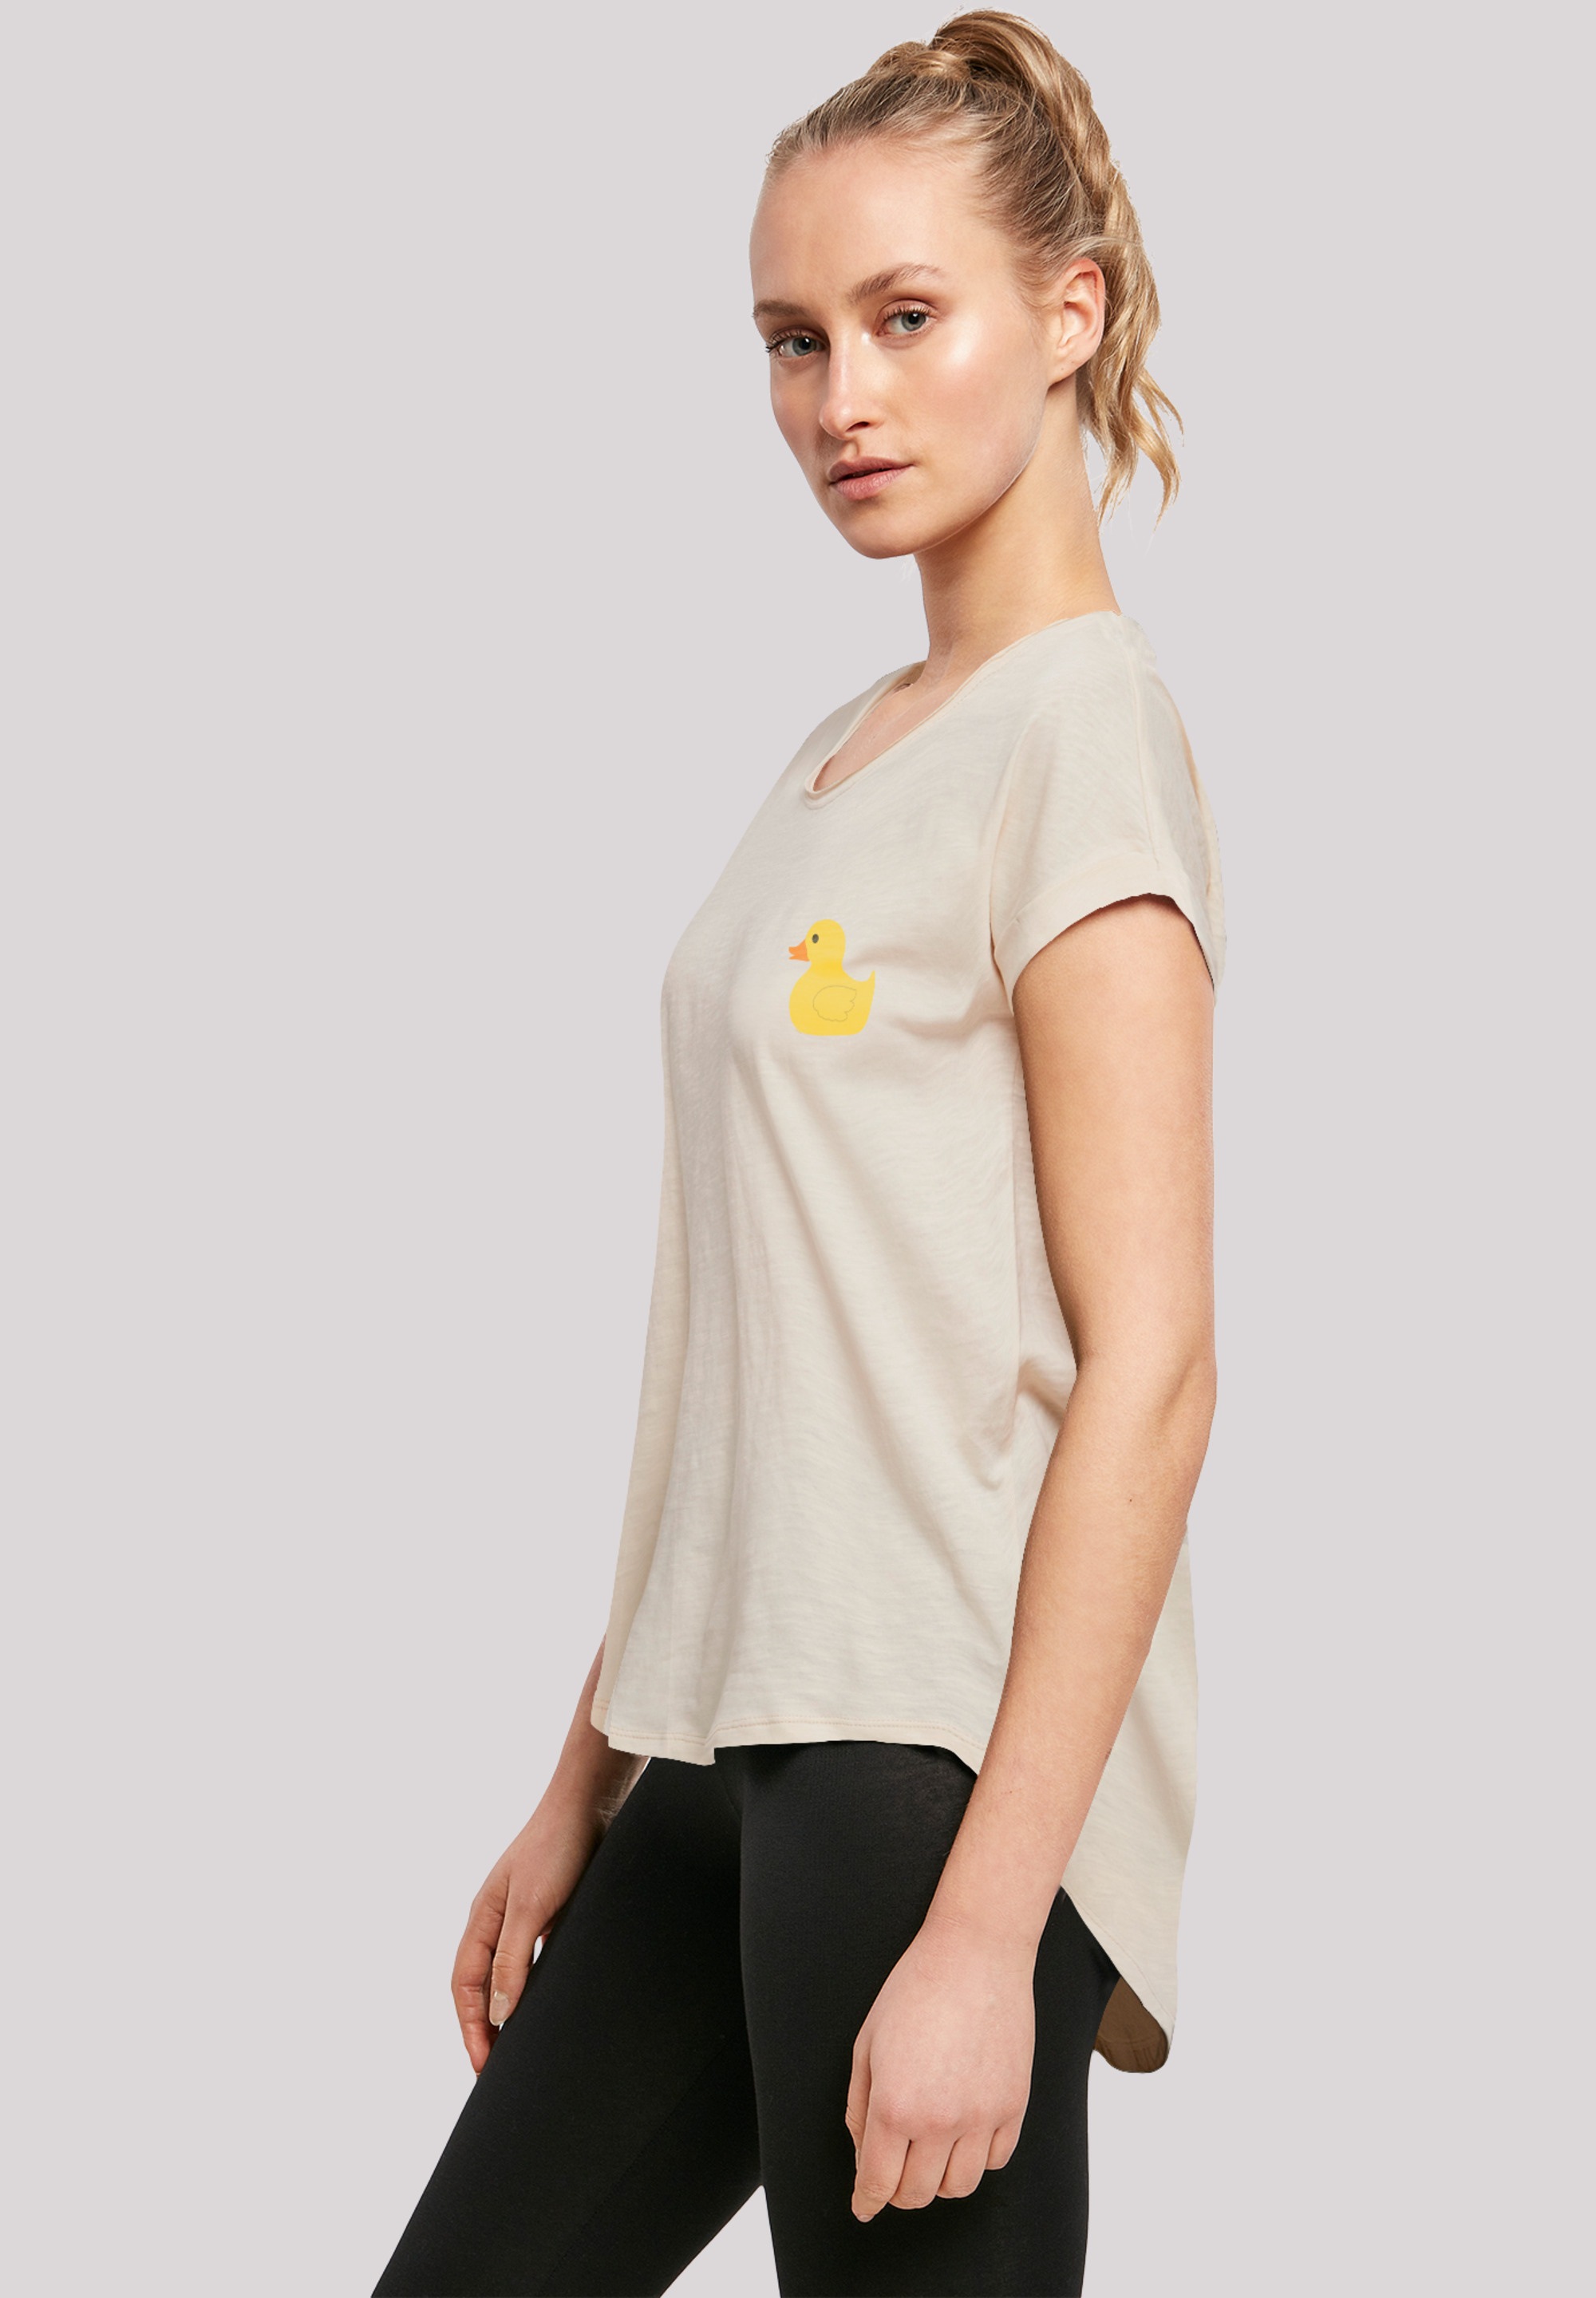 F4NT4STIC T-Shirt »Yellow Rubber Duck LONG«, Print kaufen